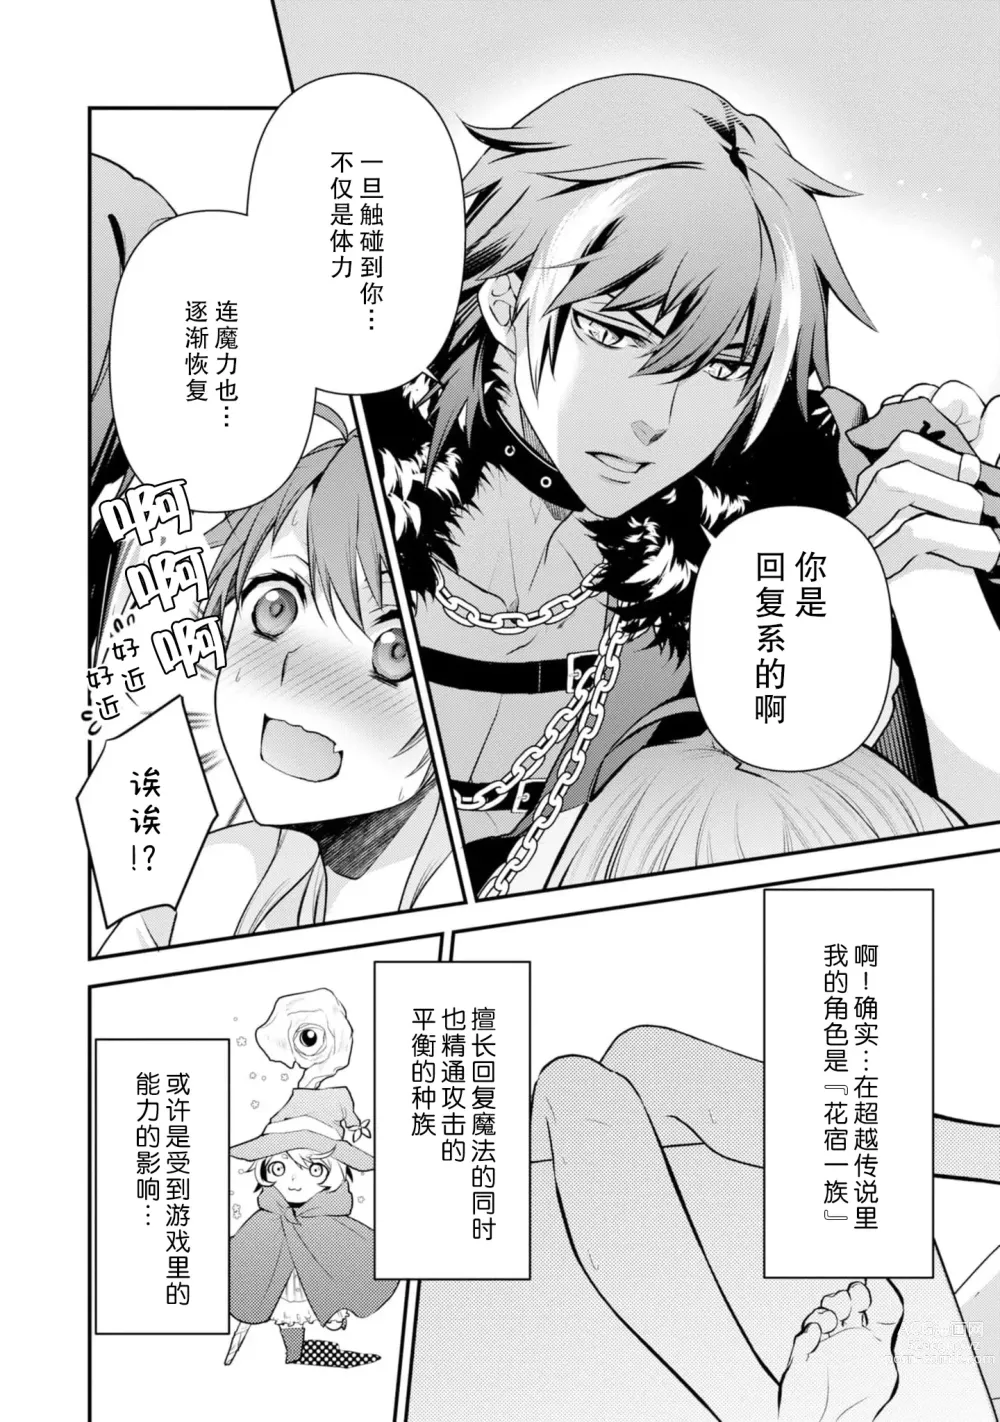 Page 29 of manga 最终BOSS转生而来，因此拿下了他的童贞 1-9 end